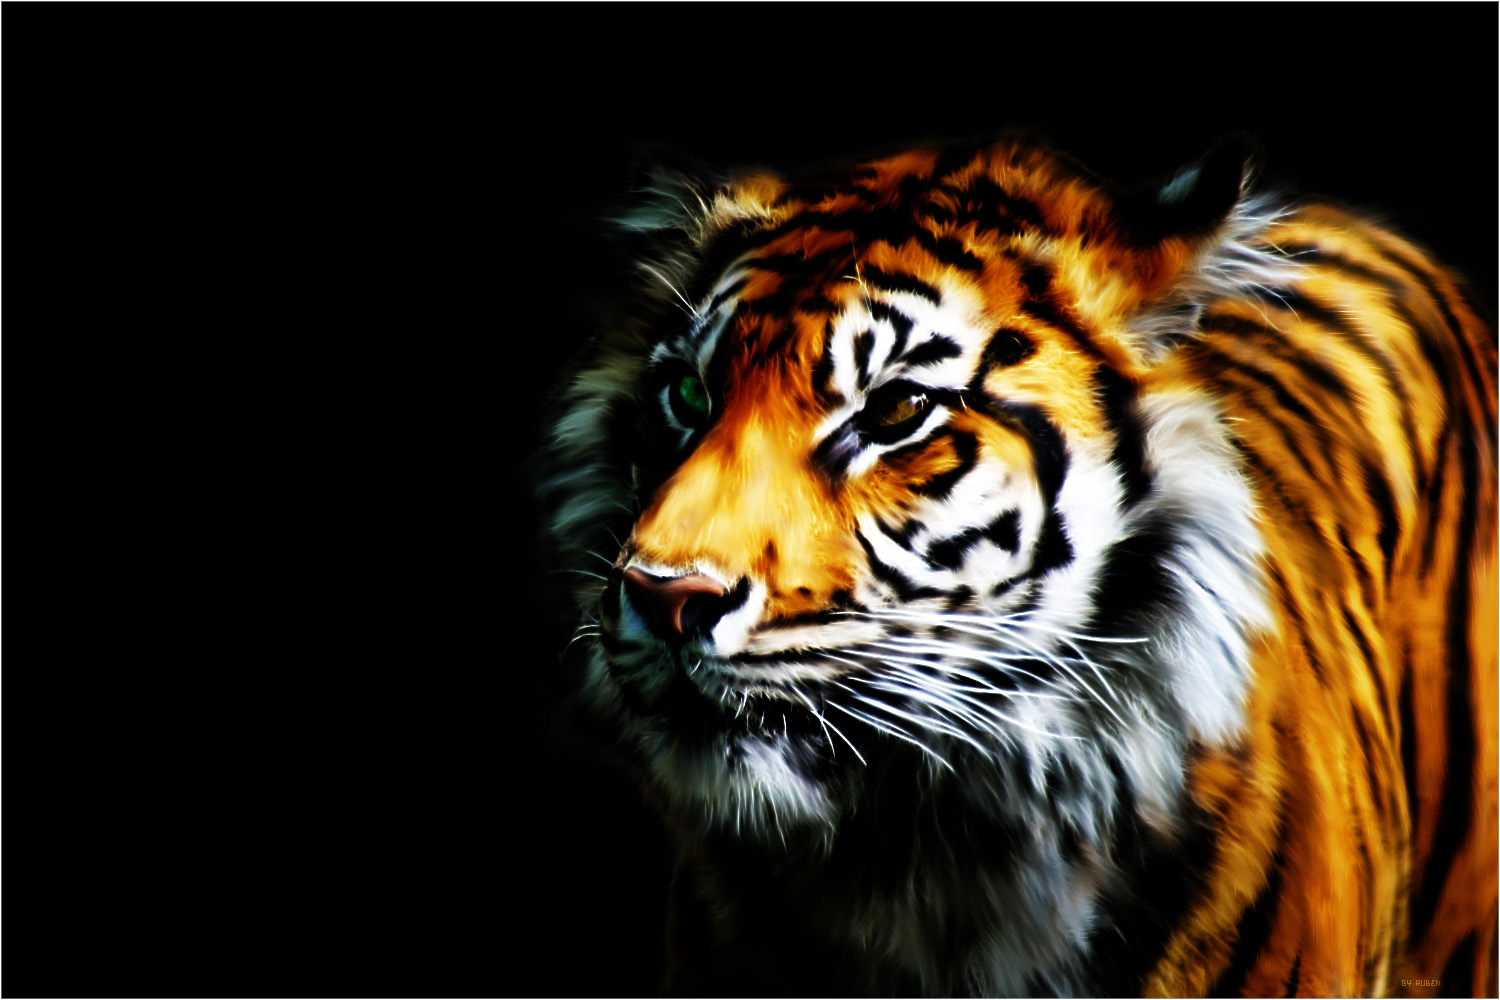 Tiger wallpaper for laptops